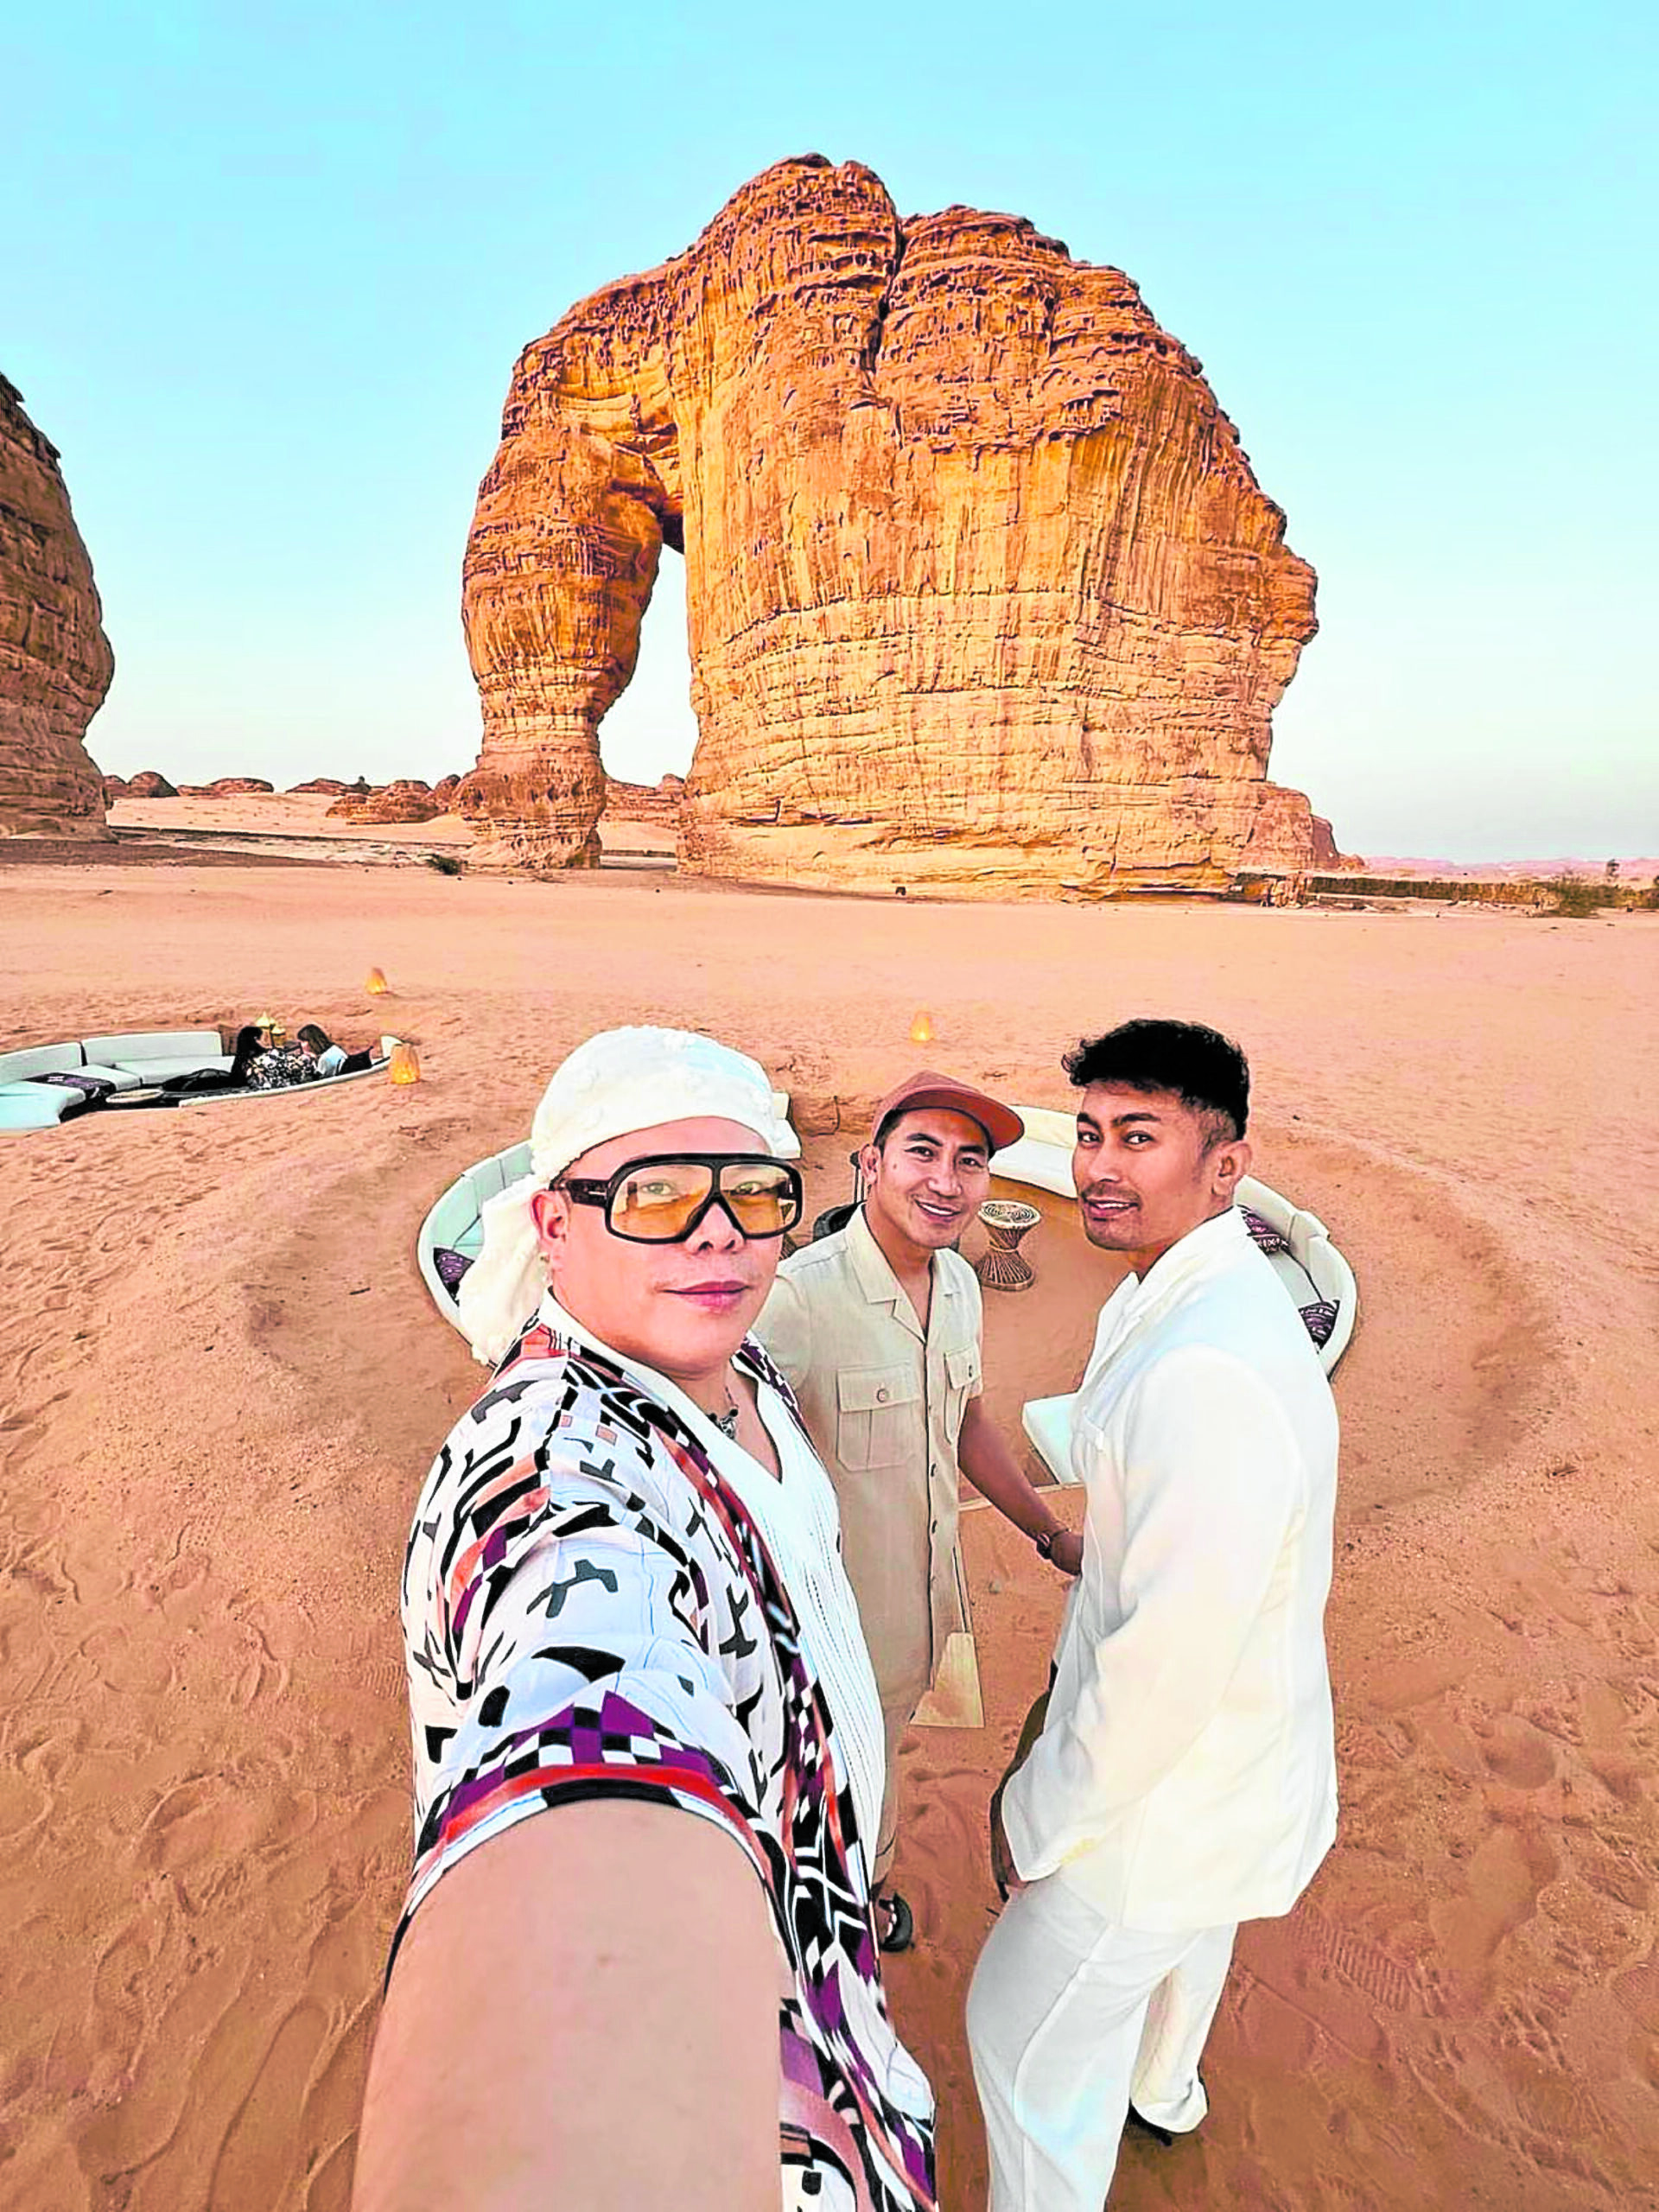 Teddy Manuel,Gideon Hermosa
and Michael Ruiz
at the Elephant
Rock in Alula,
Saudi Arabia